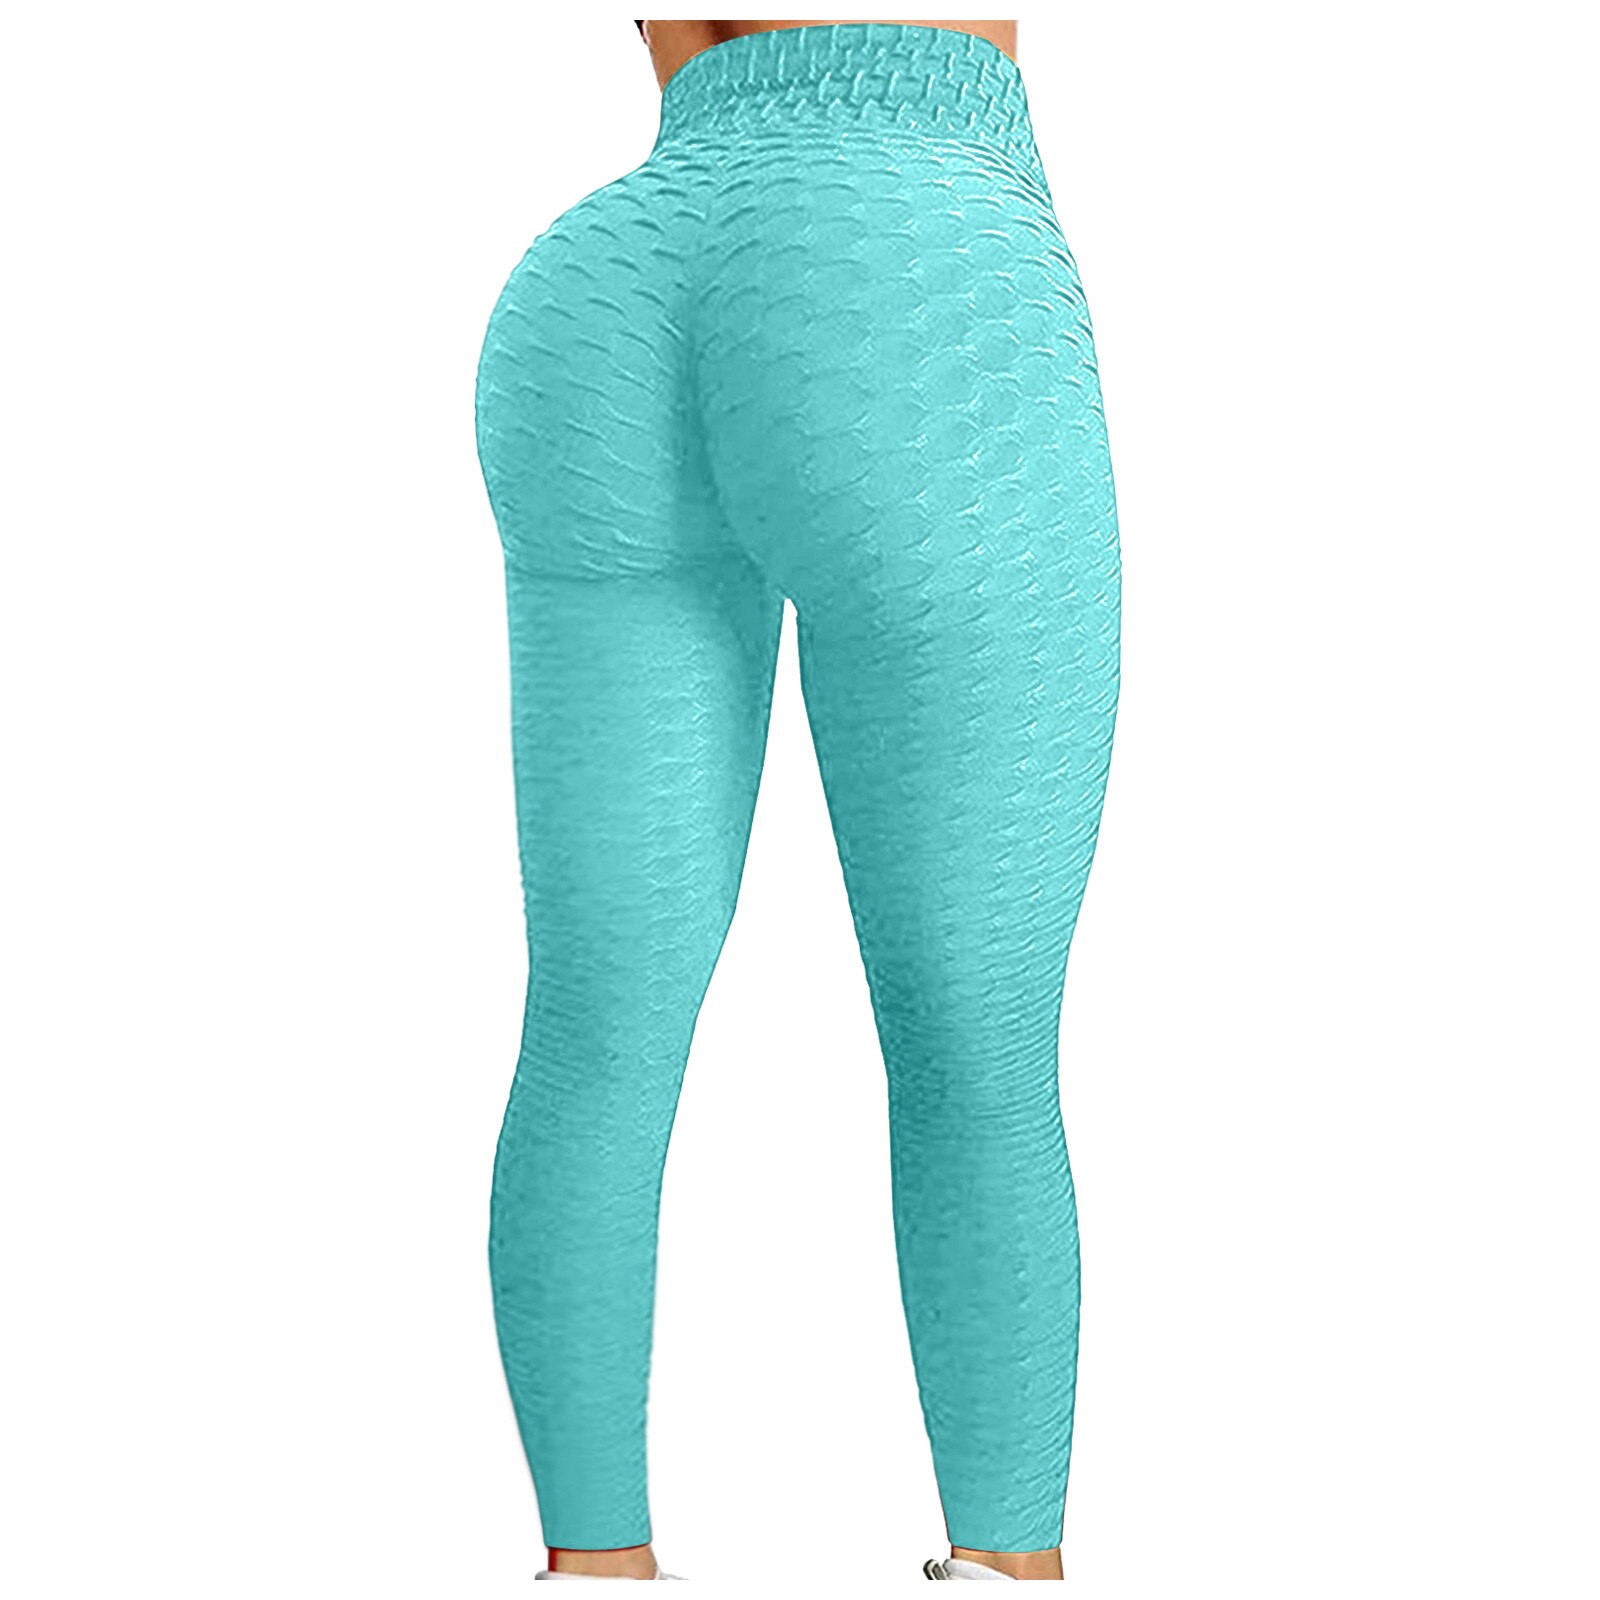 Yoga Pants Fitness Sports Leggings Jacquard gym pantalones Female Running Trousers High Waist Tight leggings women